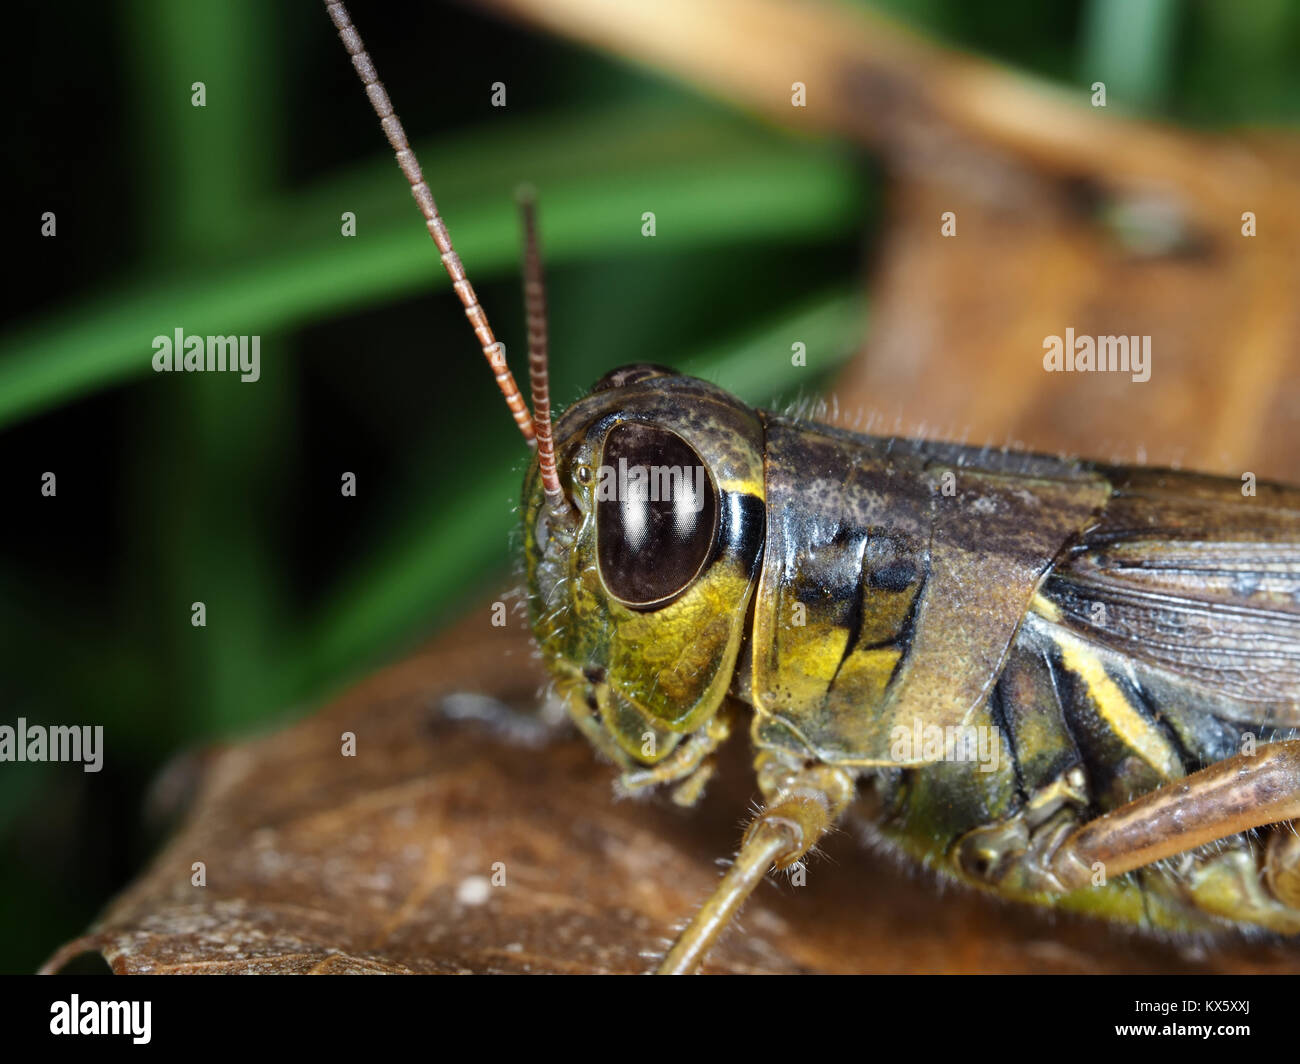 Red-legged grasshopper (Melanoplus femurrubrum) close-up Stock Photo